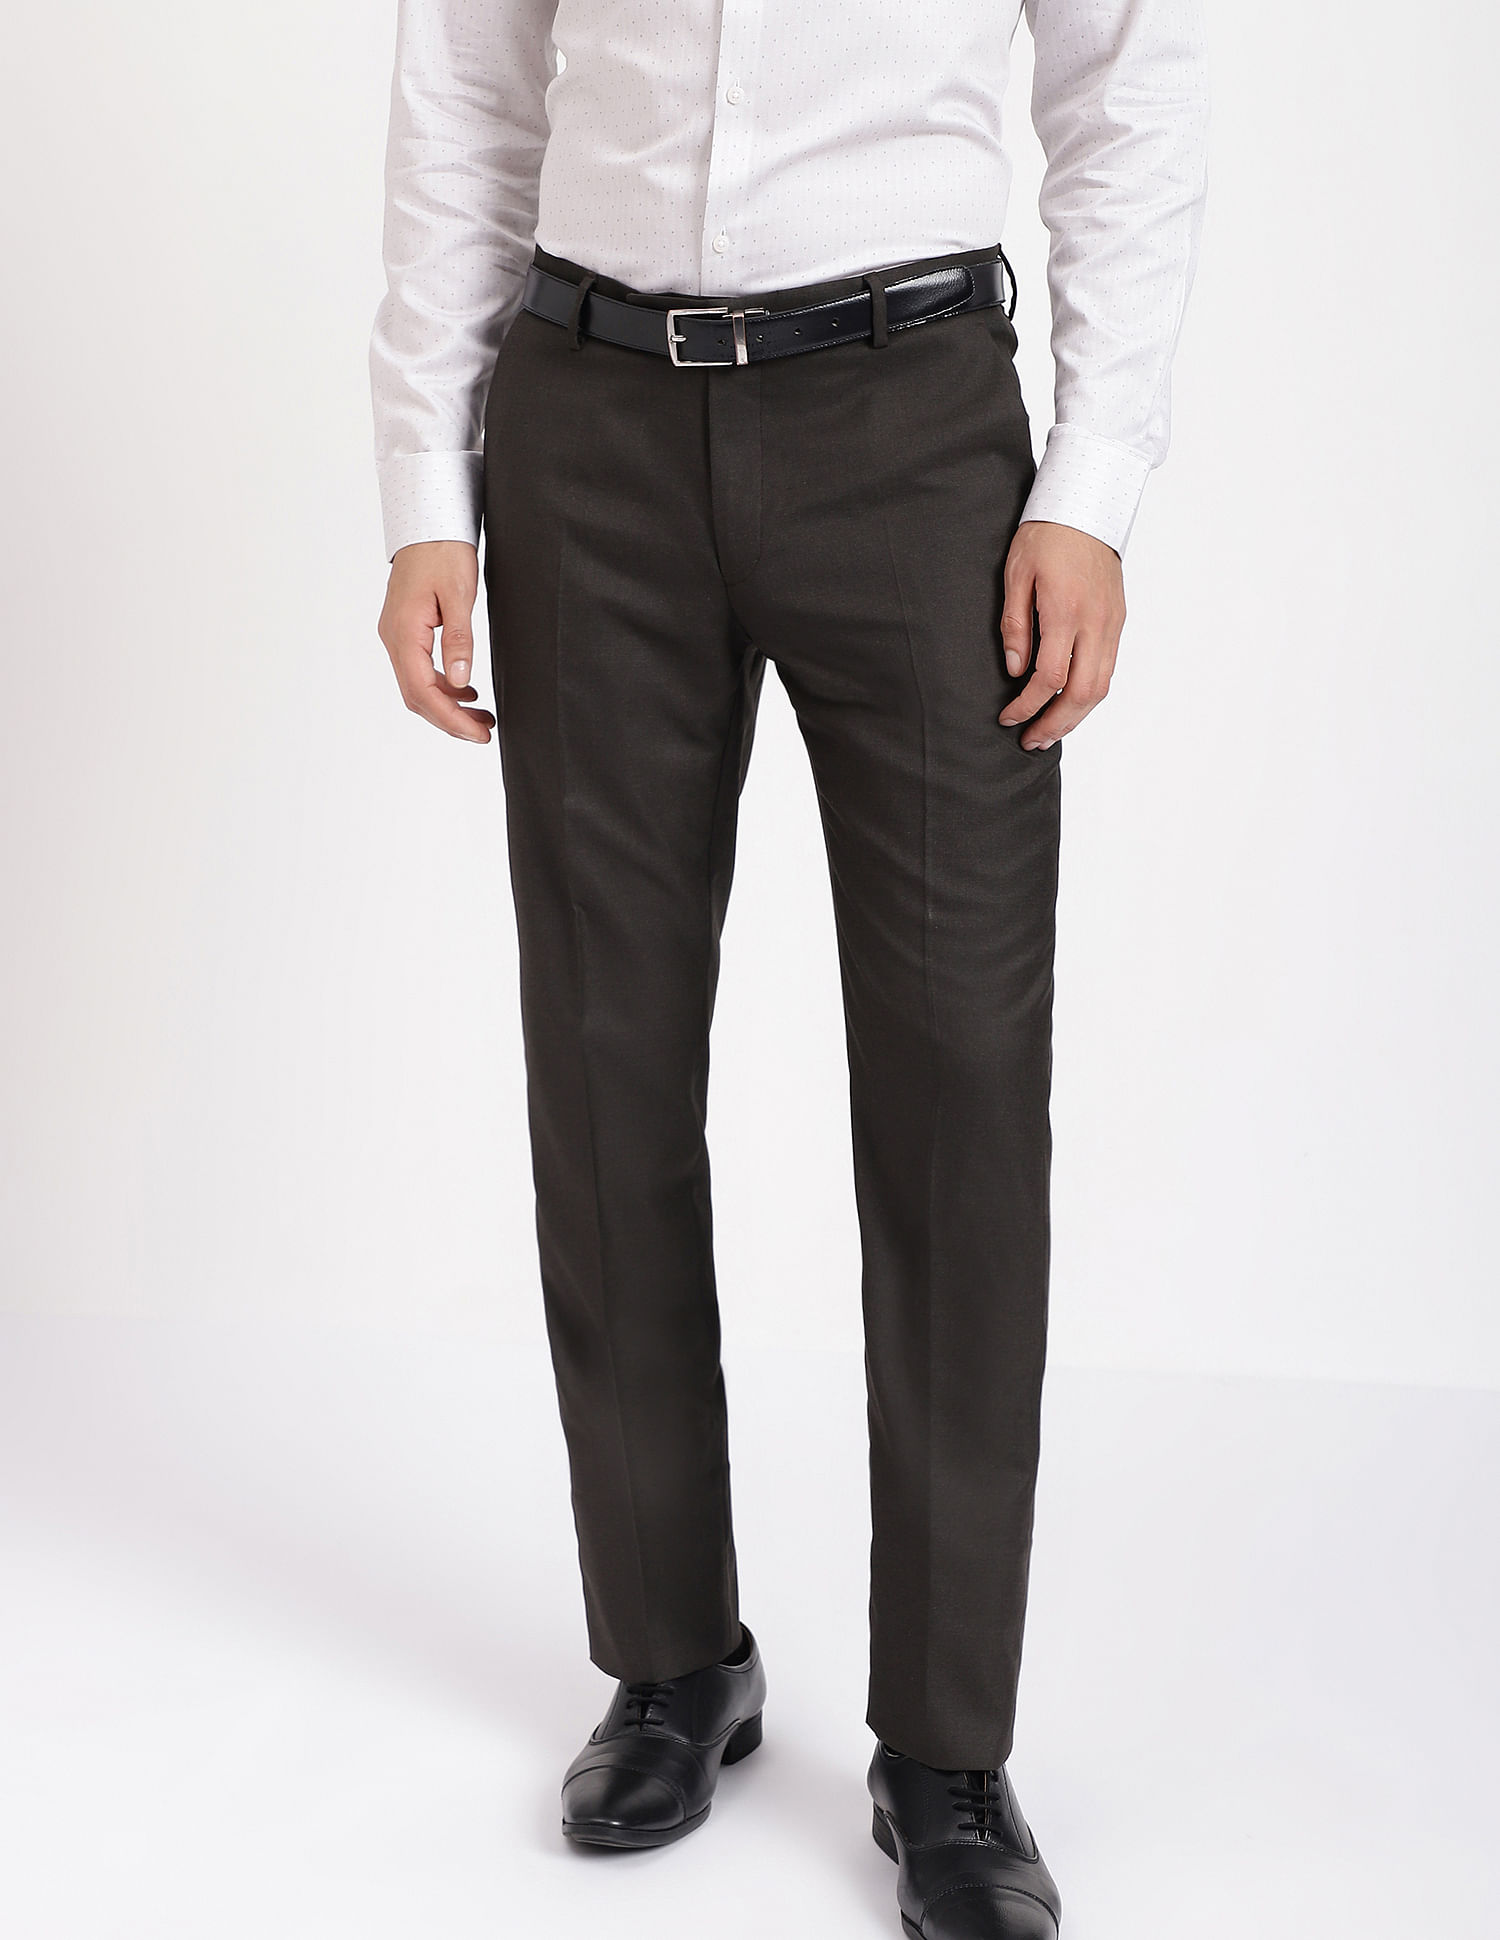 Dress Pants | Tailored Pants | Men's Pants | The Shirt Bar Online Store